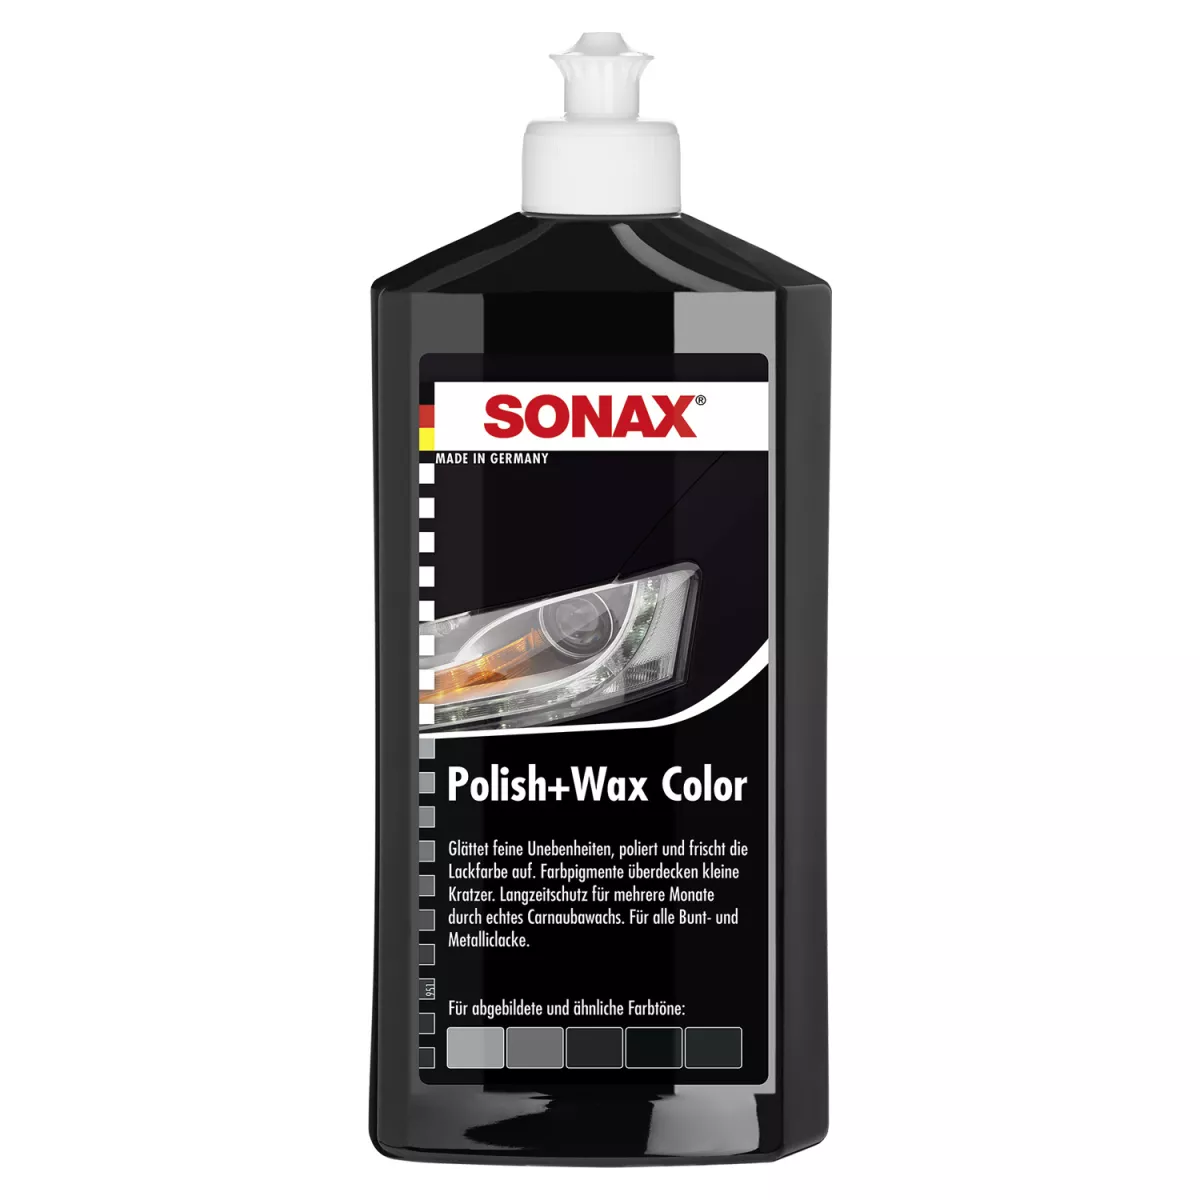 SONAX Polish+Wax Color Farbpolitur 500 Milliliter schwarz